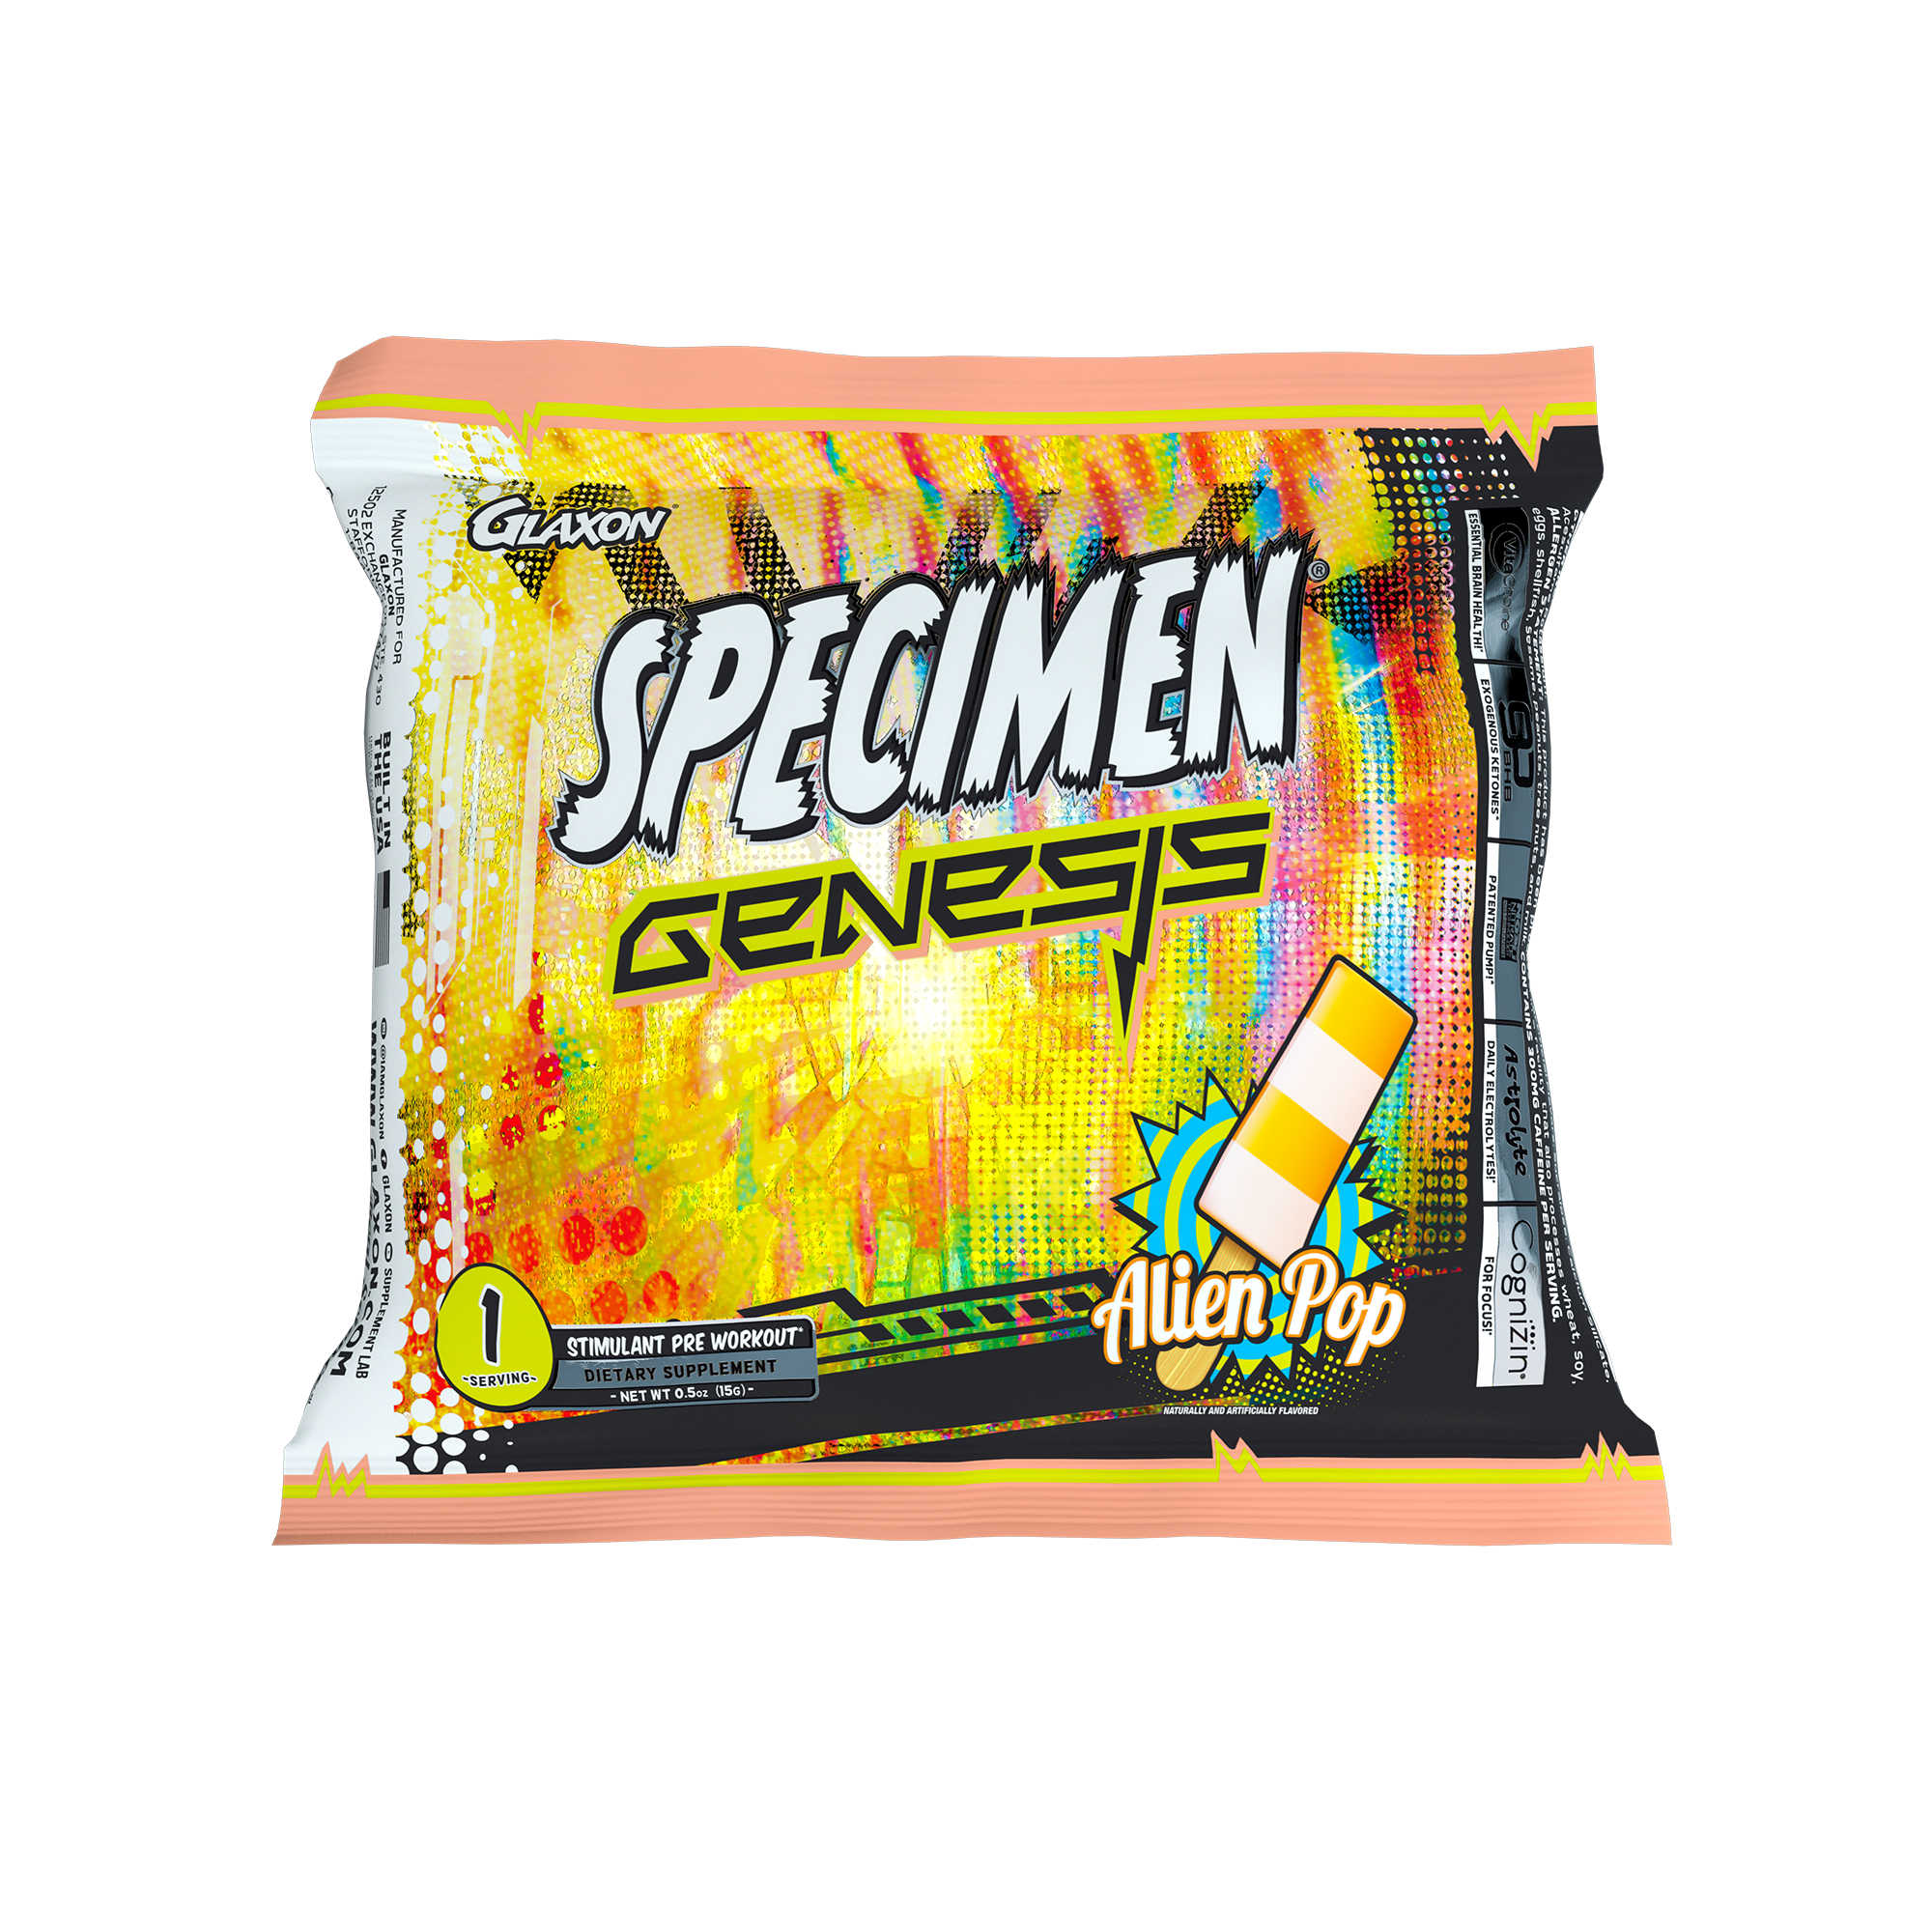 Glaxon Specimen Genesis Sample Packet - Stimulant Pre-Workout